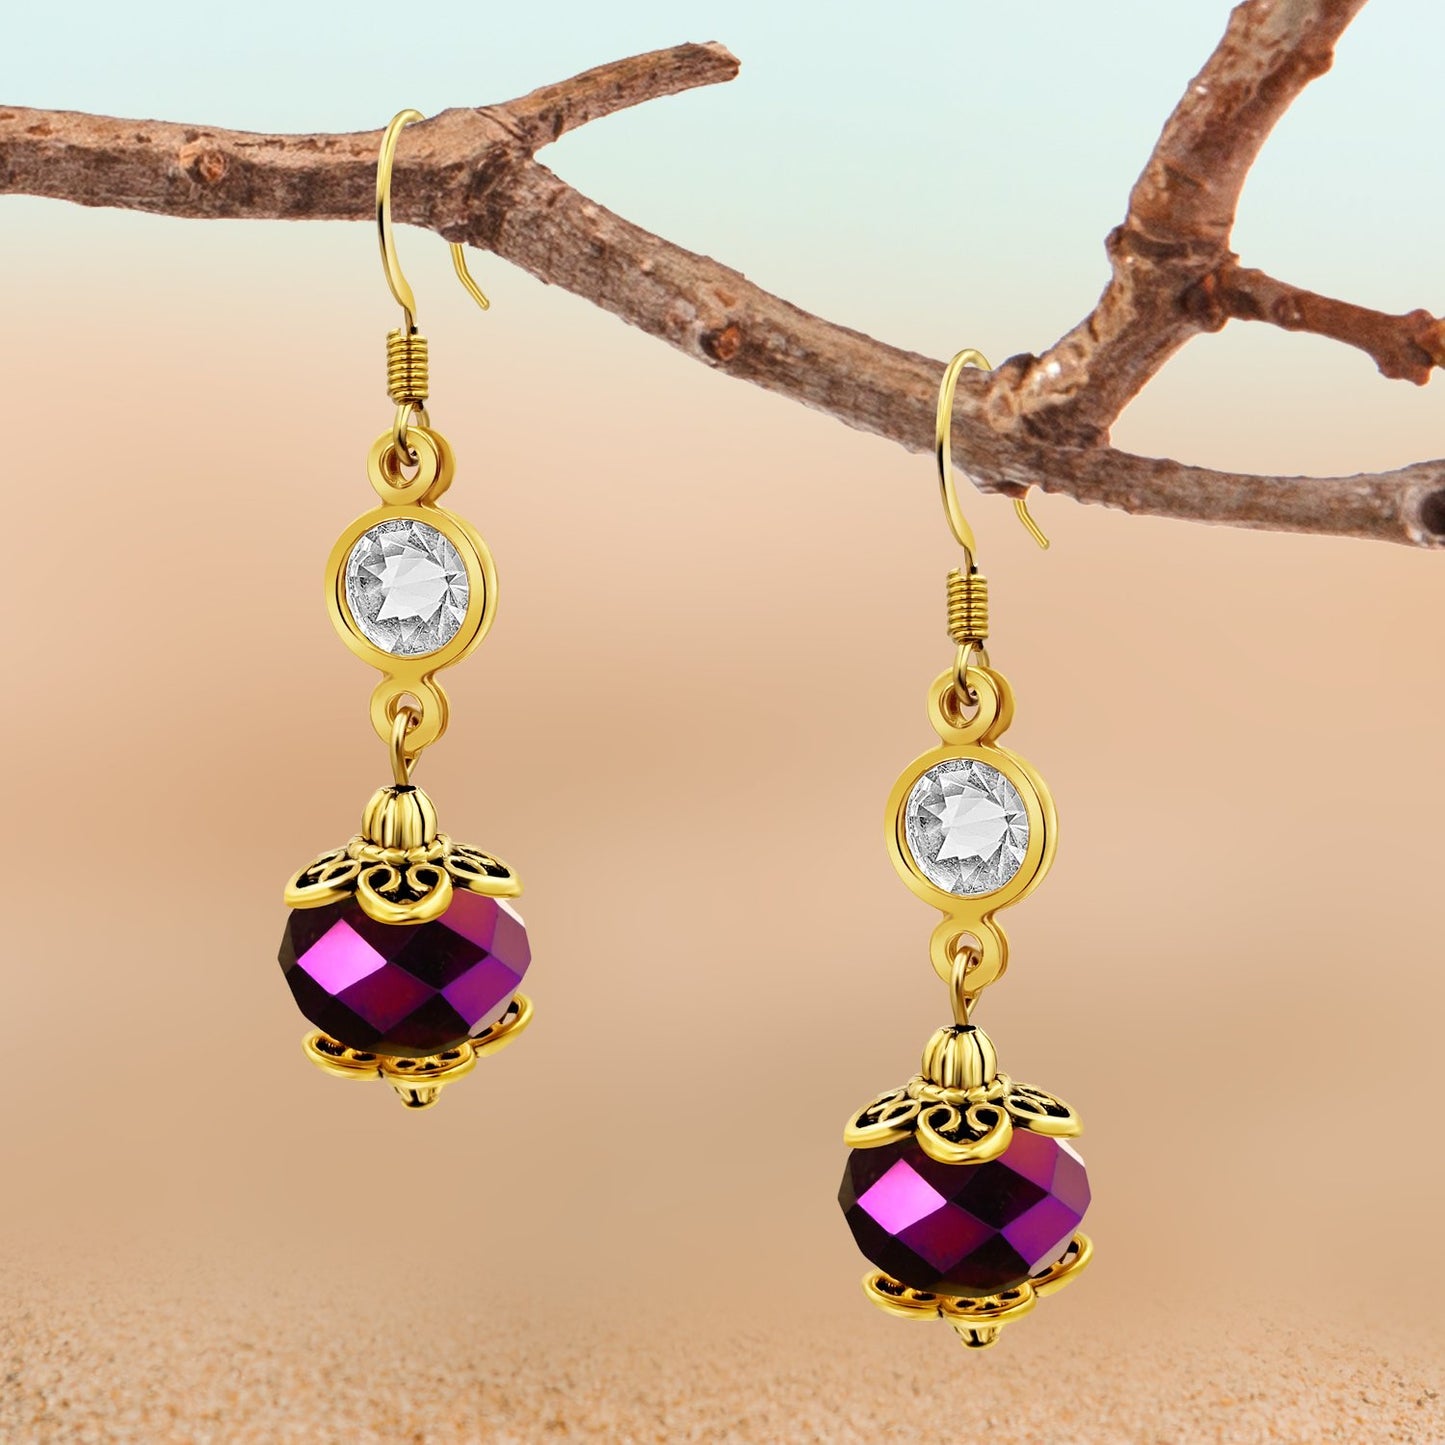 BESHEEK Goldtone and Luster Purple Crystal Dangle Earrings | Handmade Hypoallergenic Boho Beach Gala Wedding Style Fashion Earrings